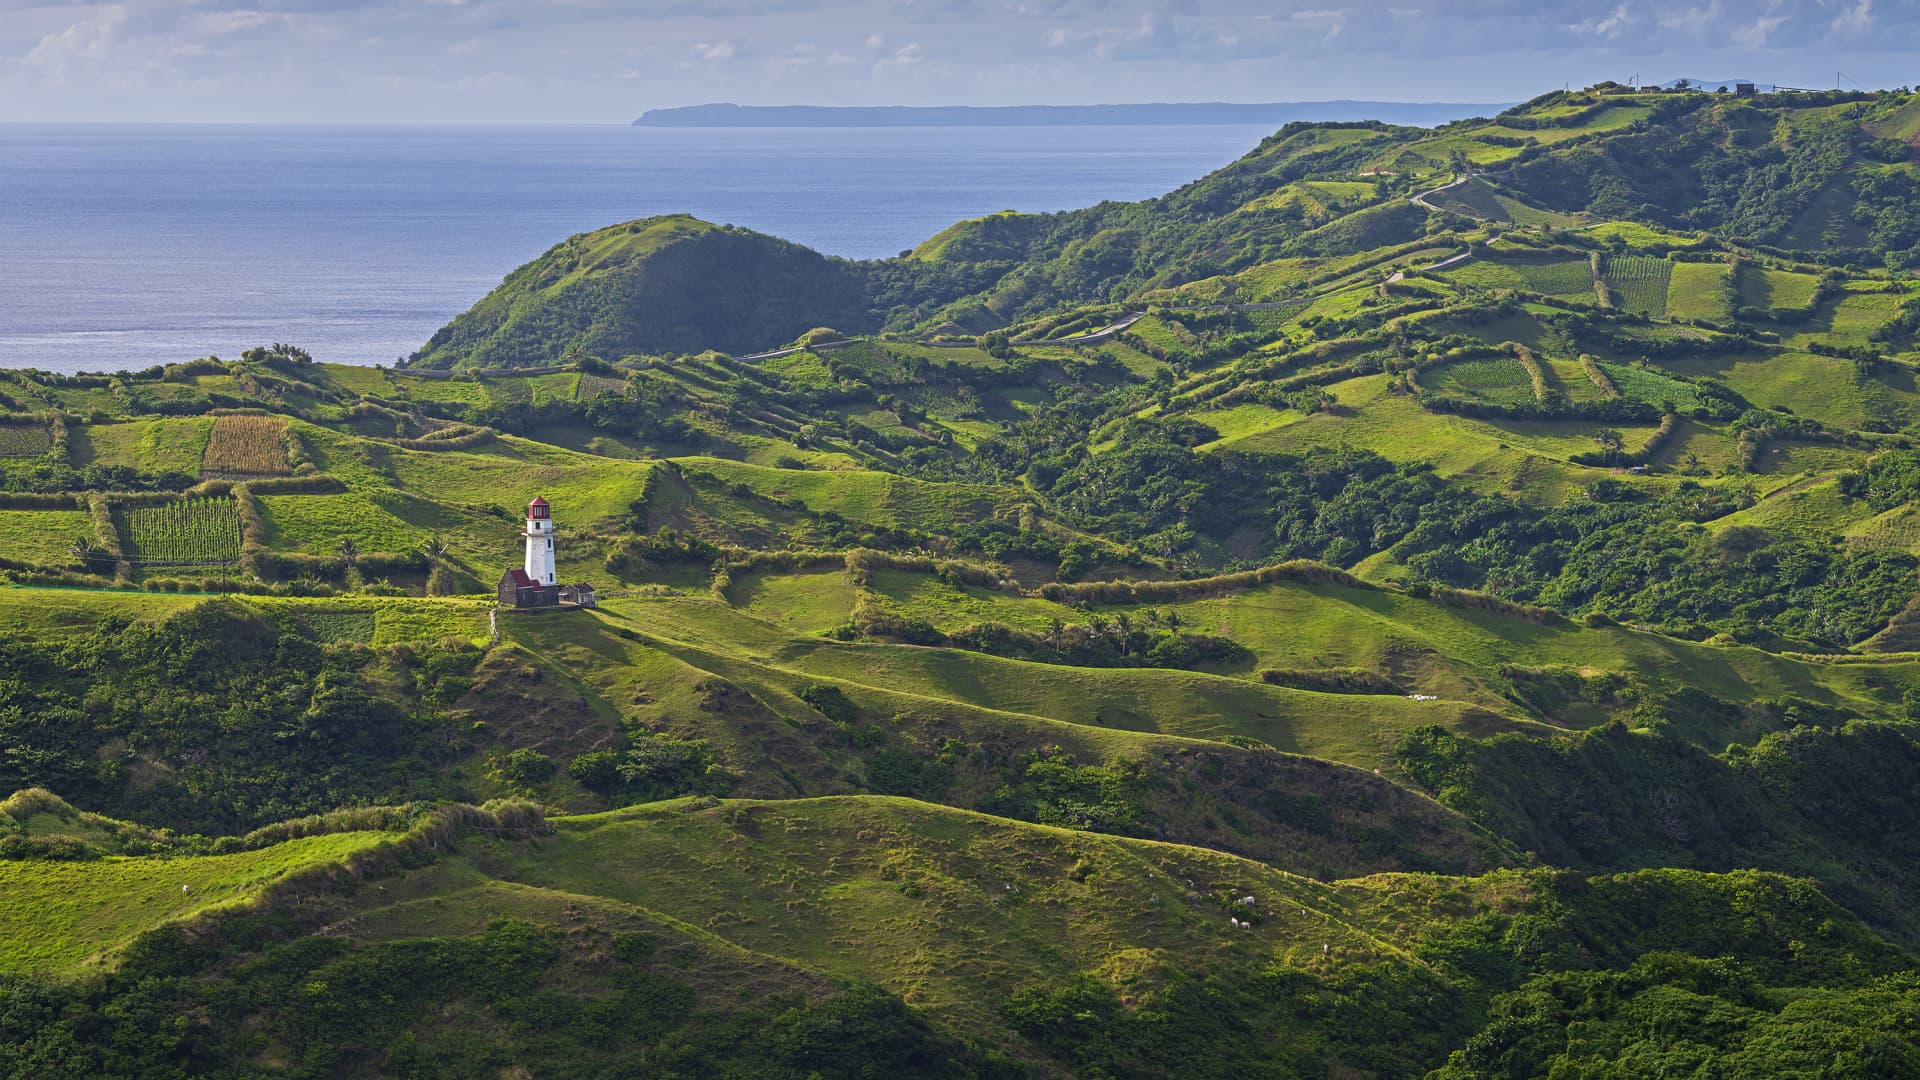 The Tayid Lighthouse on the island of Batan.